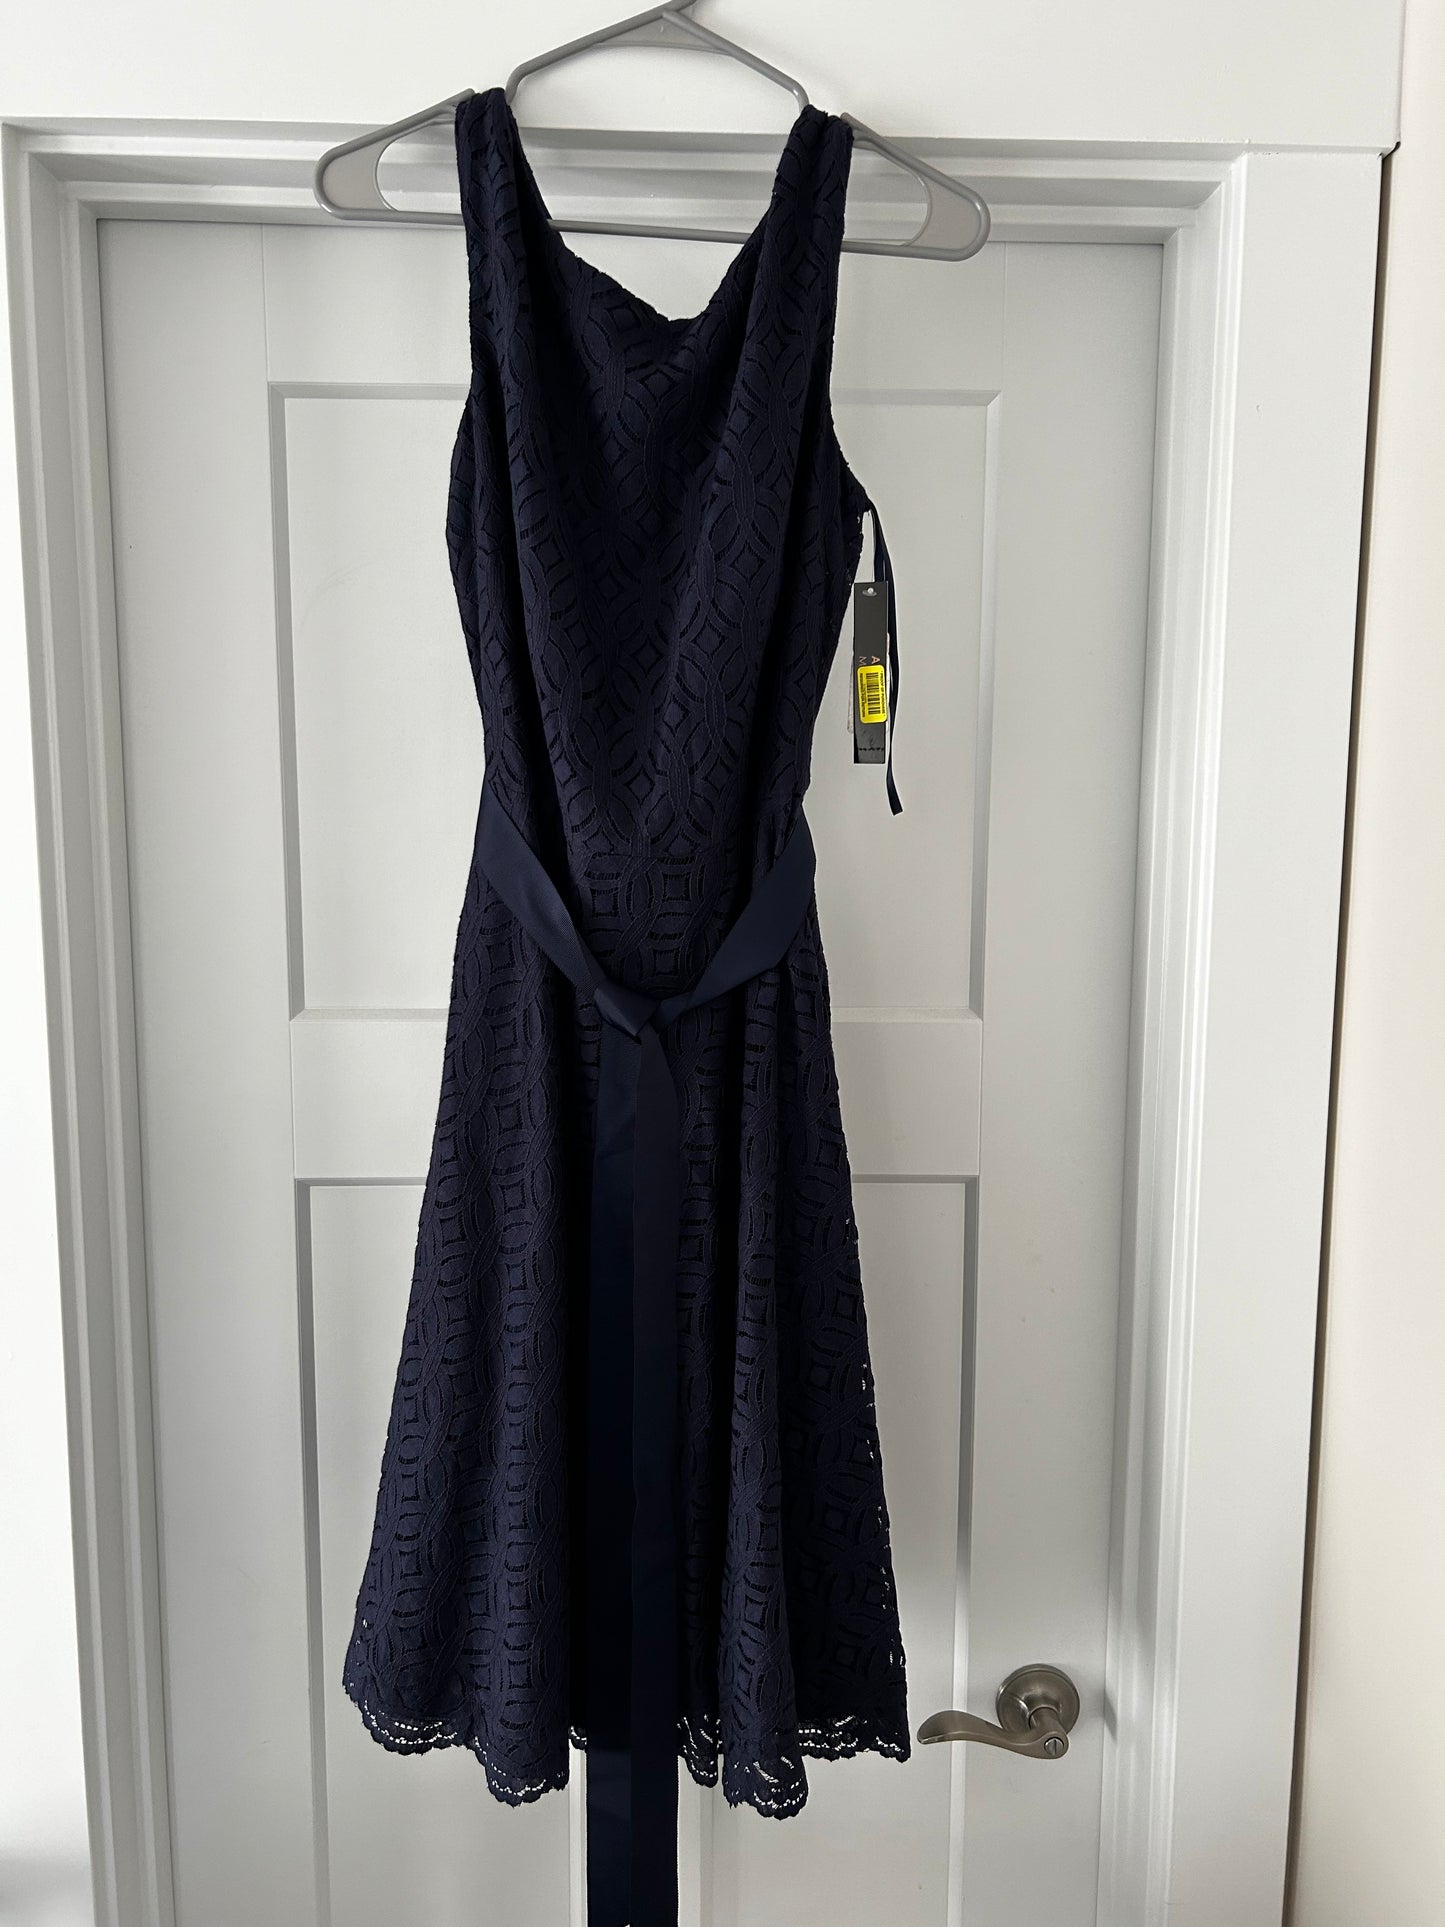 NWT Size 12 Women's Navy Lace Dress - Alex Marie